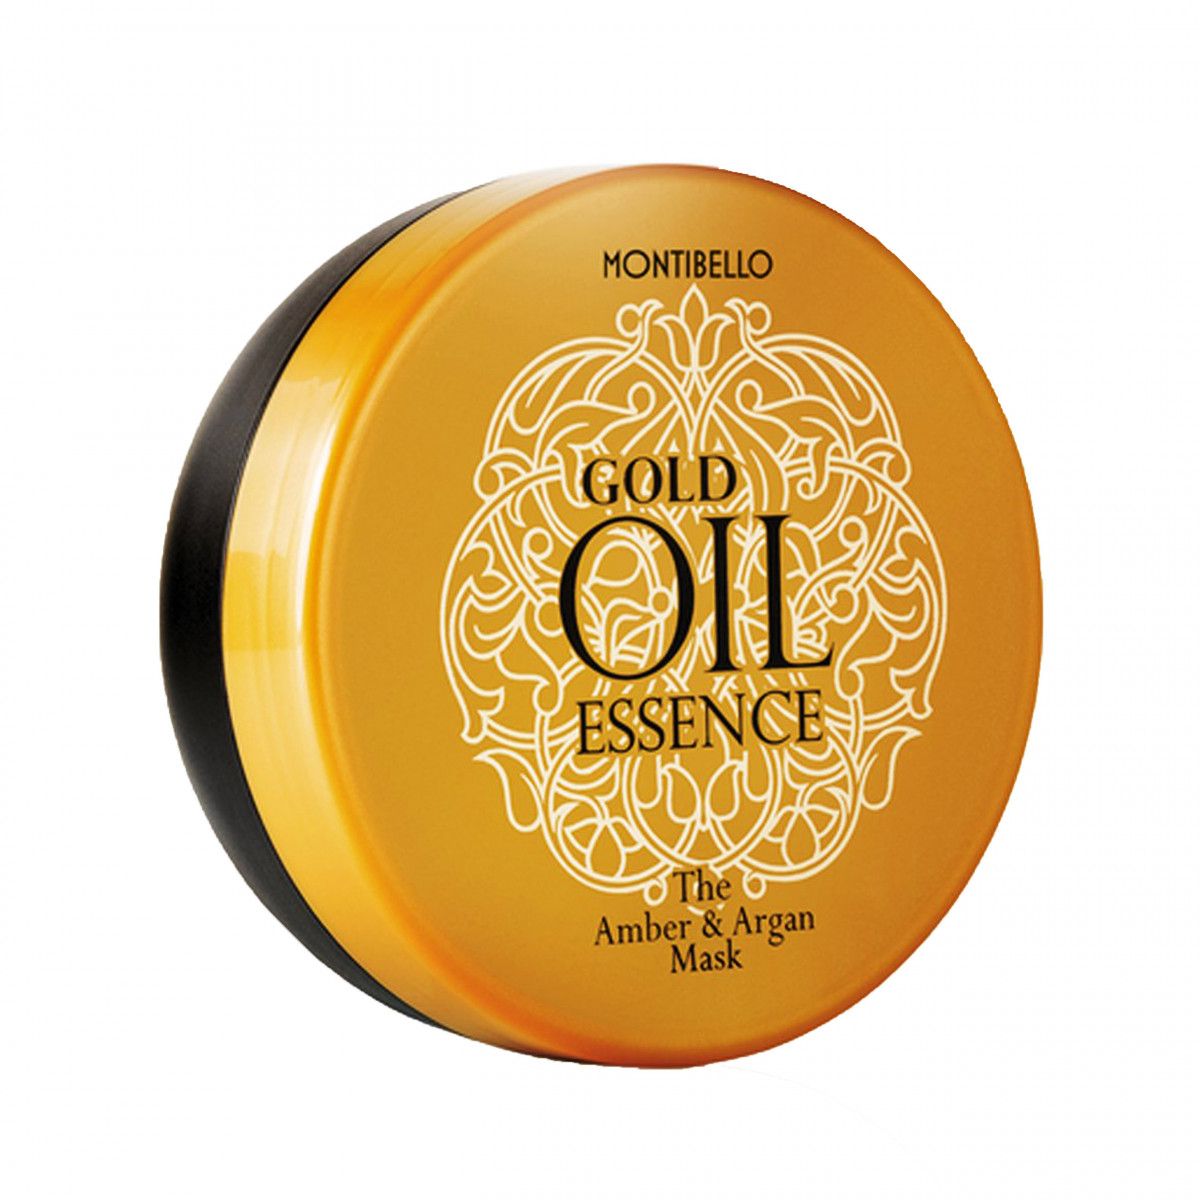 Montibello Gold Oil Essence, maska bursztynowo-arganowa, zapobiega przesuszeniu 200 ml